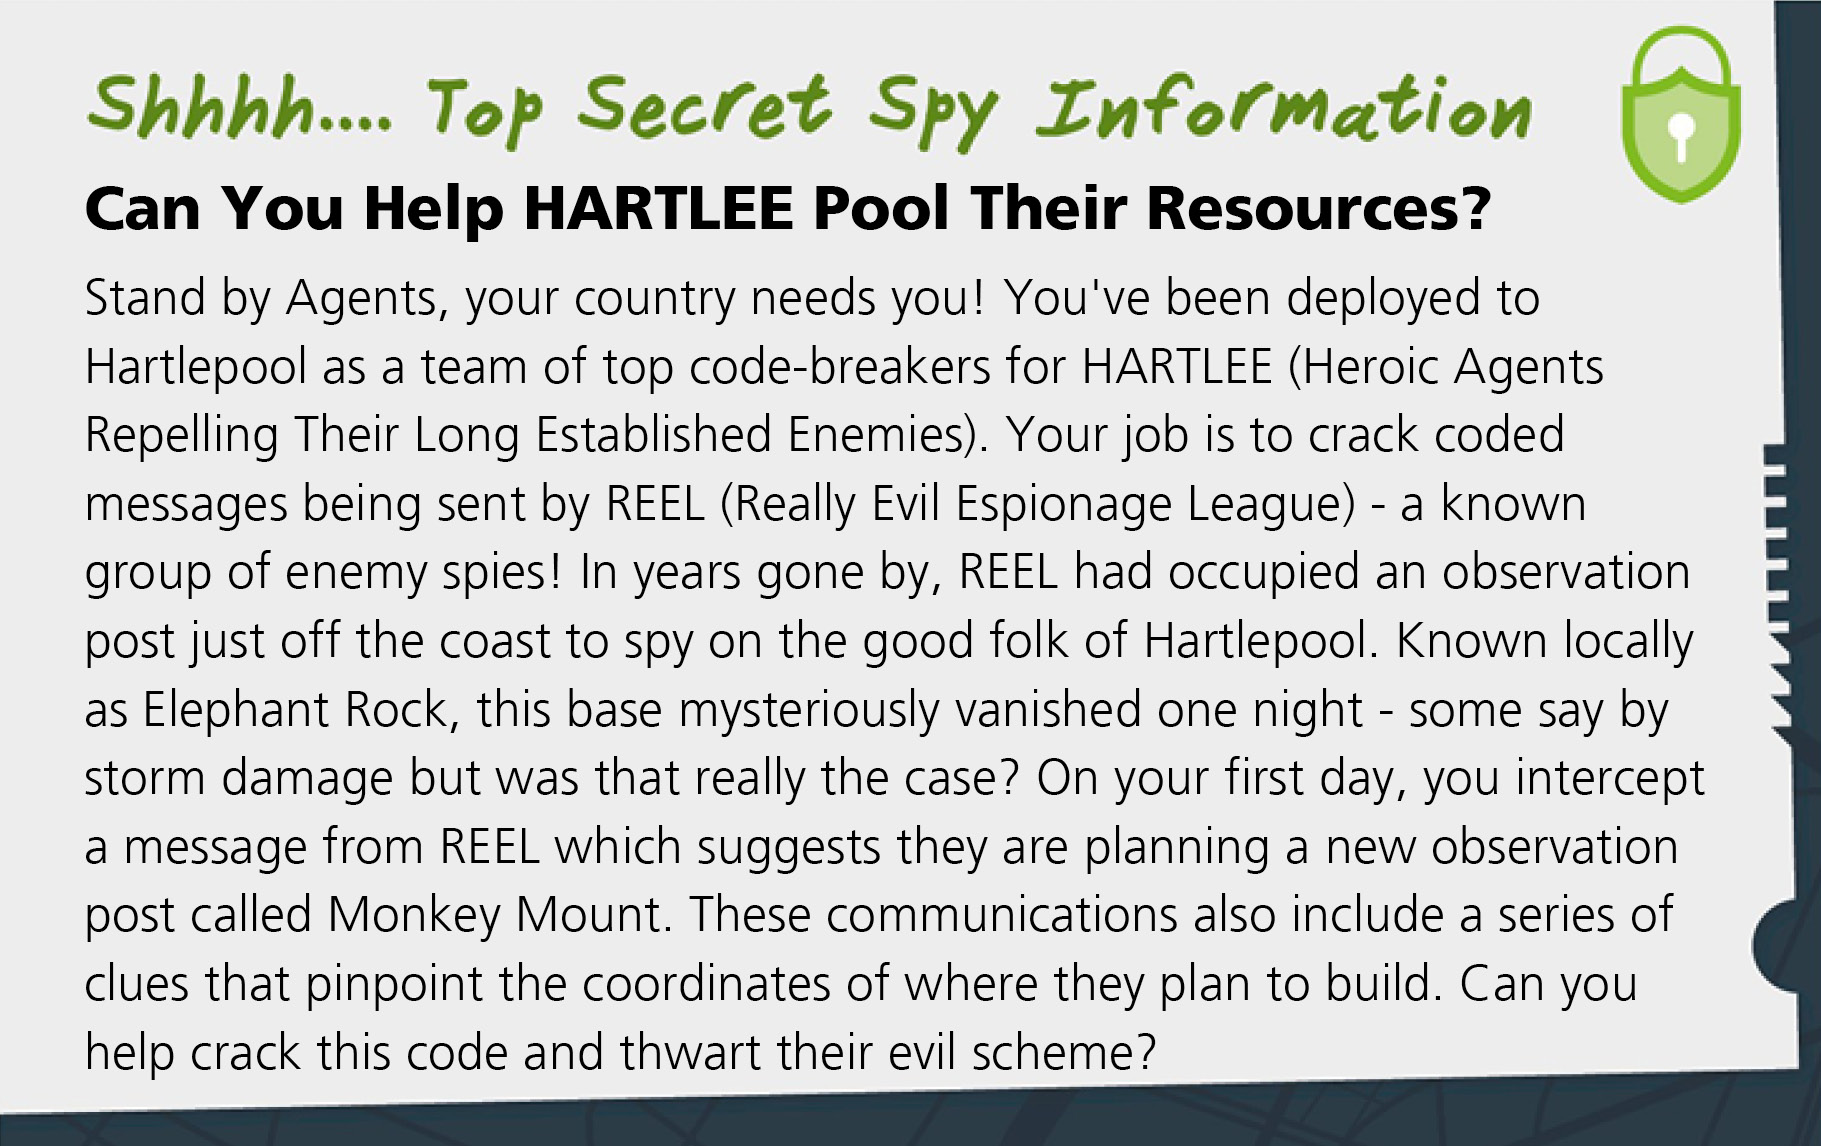 The Hartlepool spy mission backstory